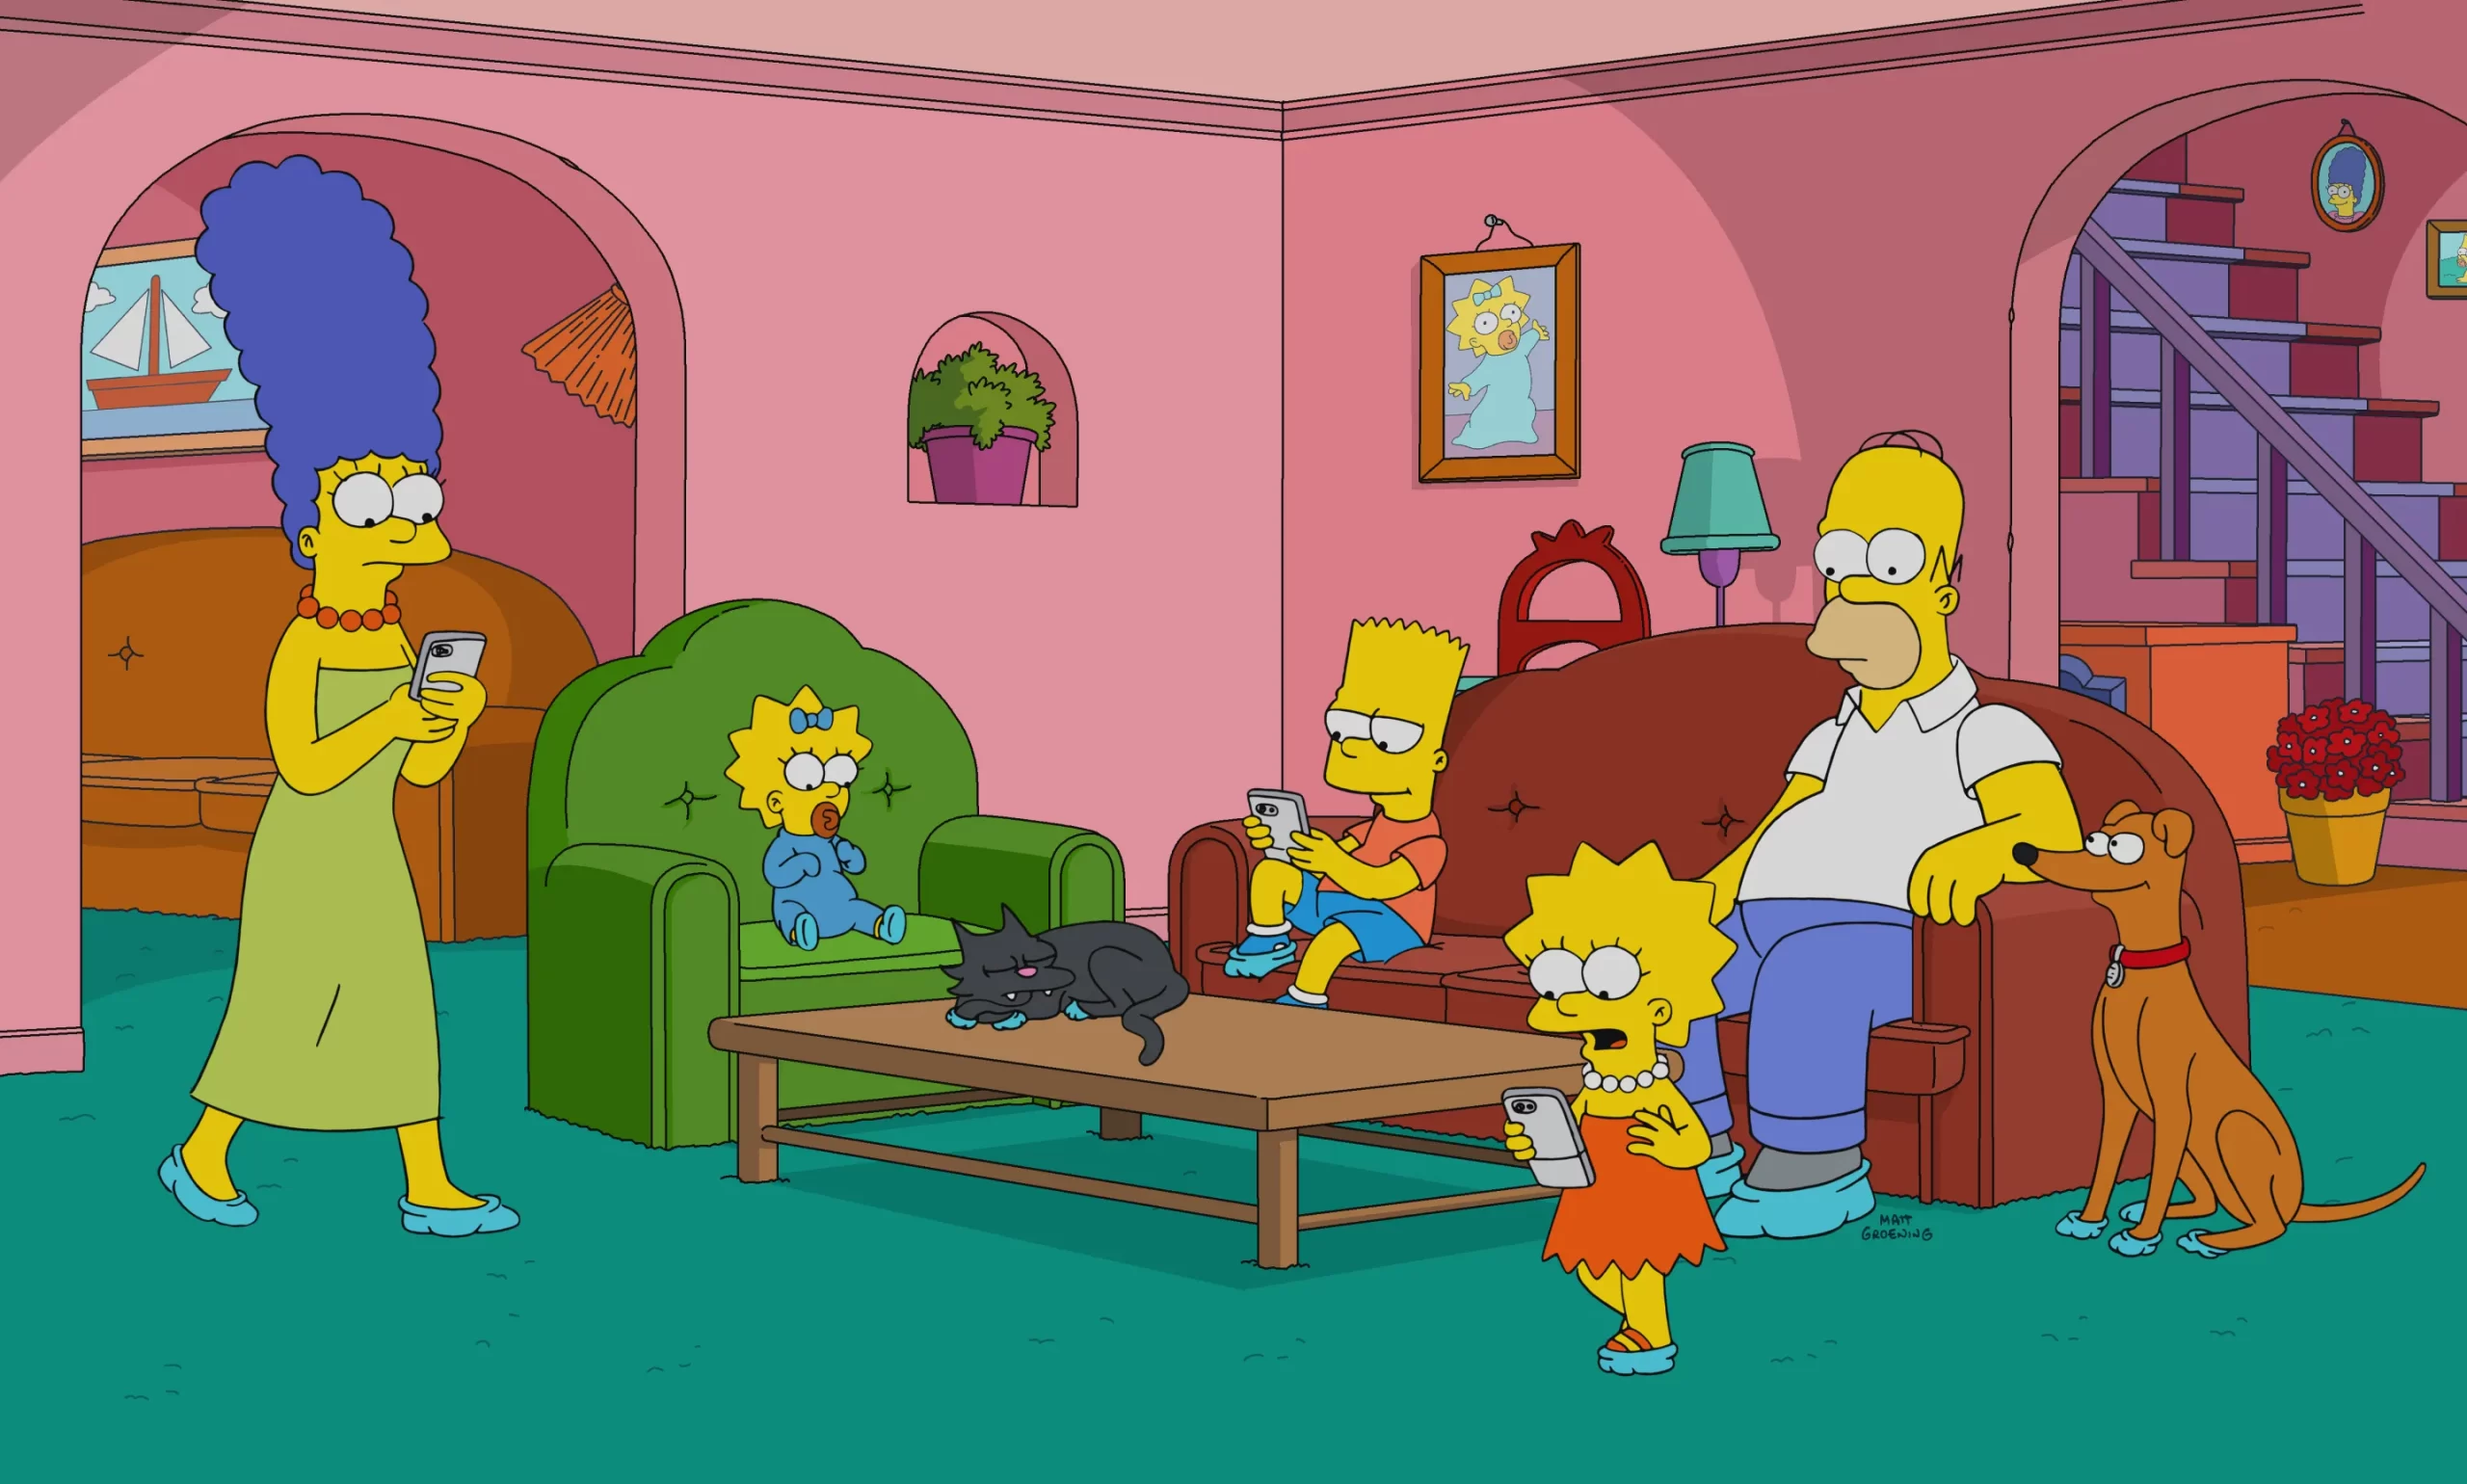 The Simpsons. 1989-Present. The Walt Disney Company.